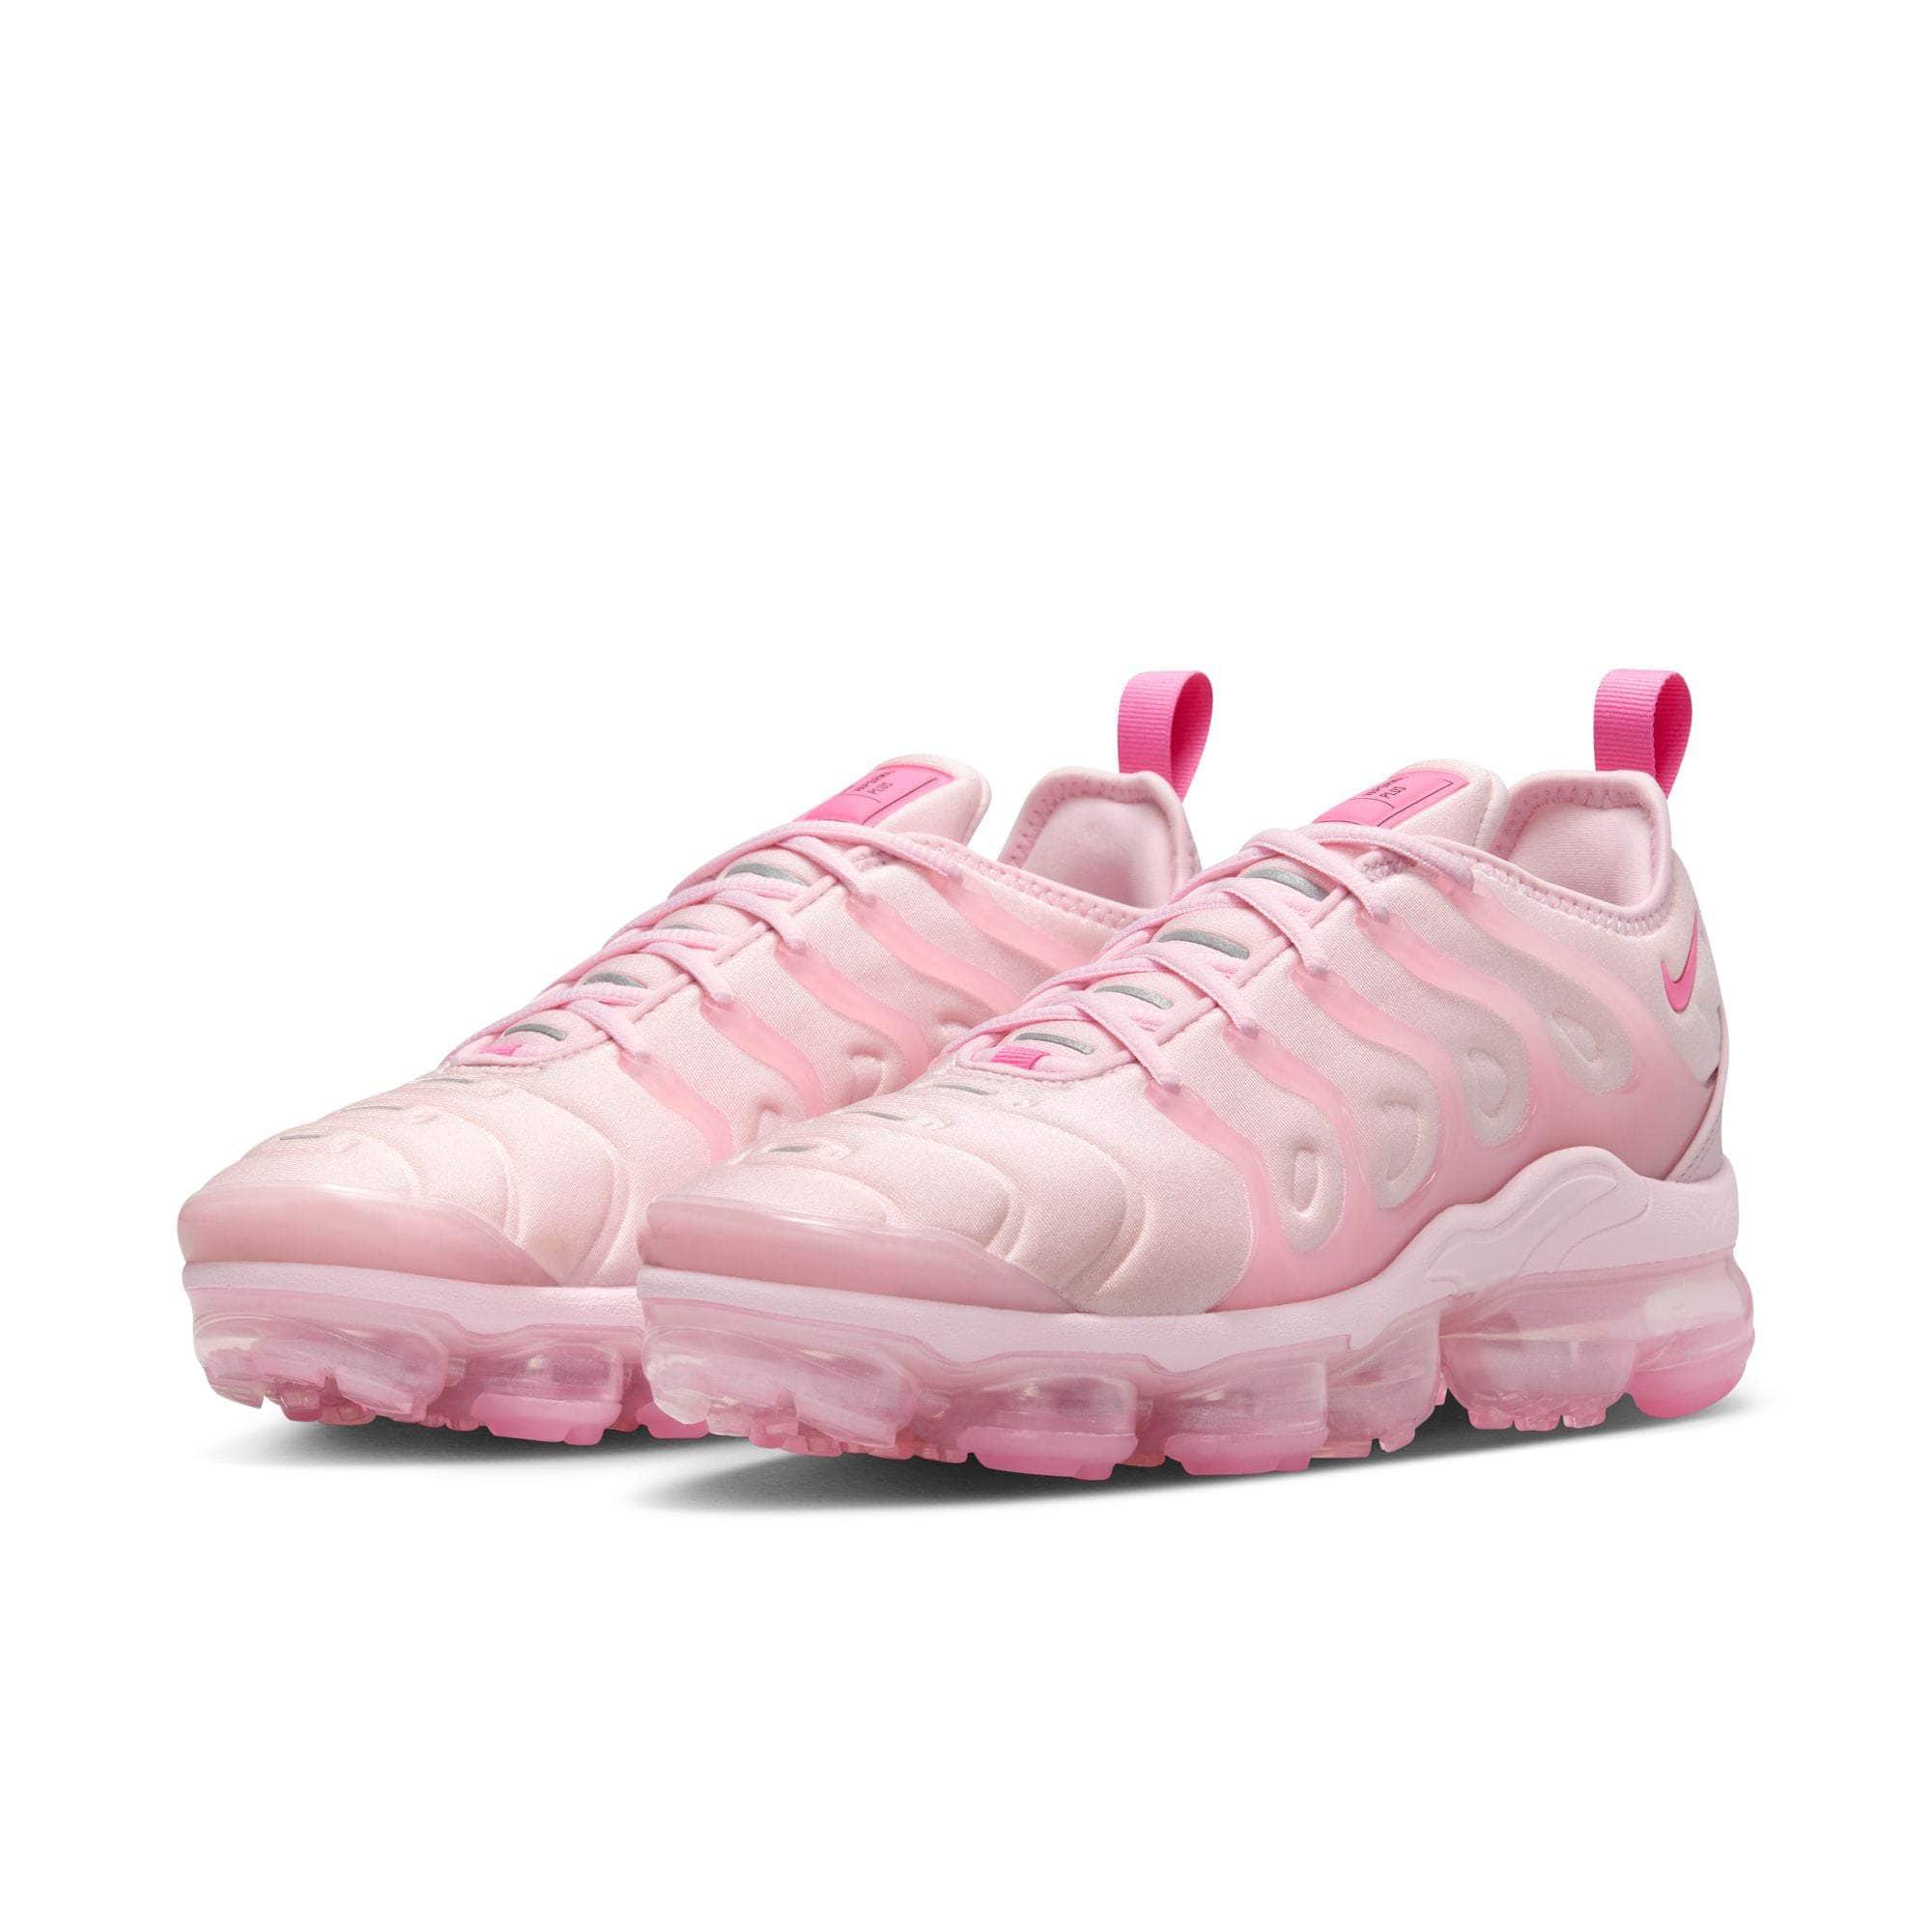 Nike FOOTWEAR Nike Air Vapor Max Plus "Pink Foam" - Women's